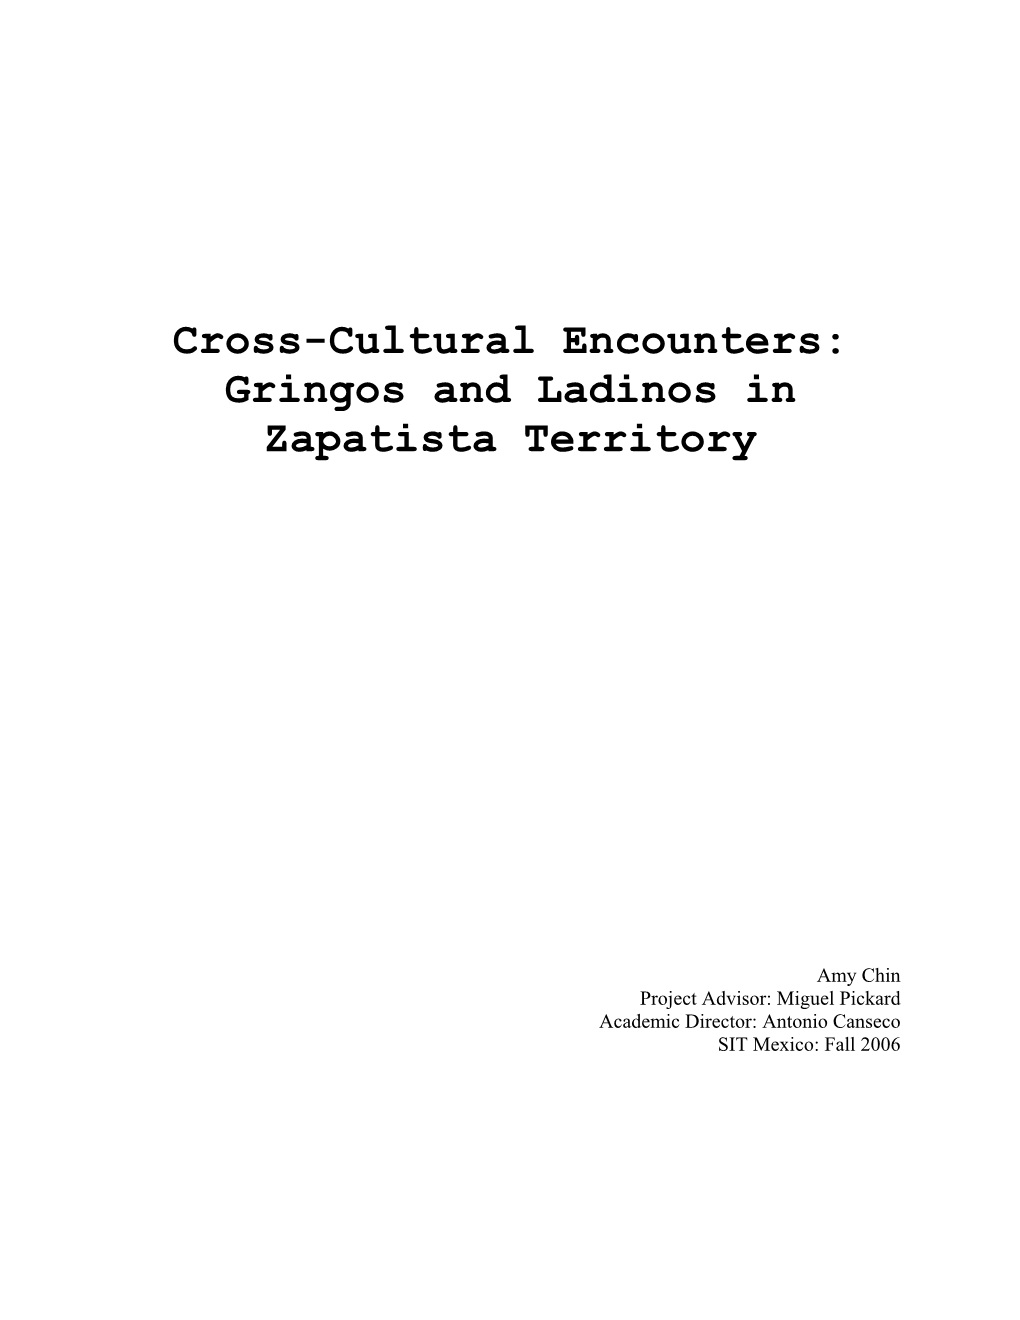 Cross-Cultural Encounters: Gringos and Ladinos in Zapatista Territory